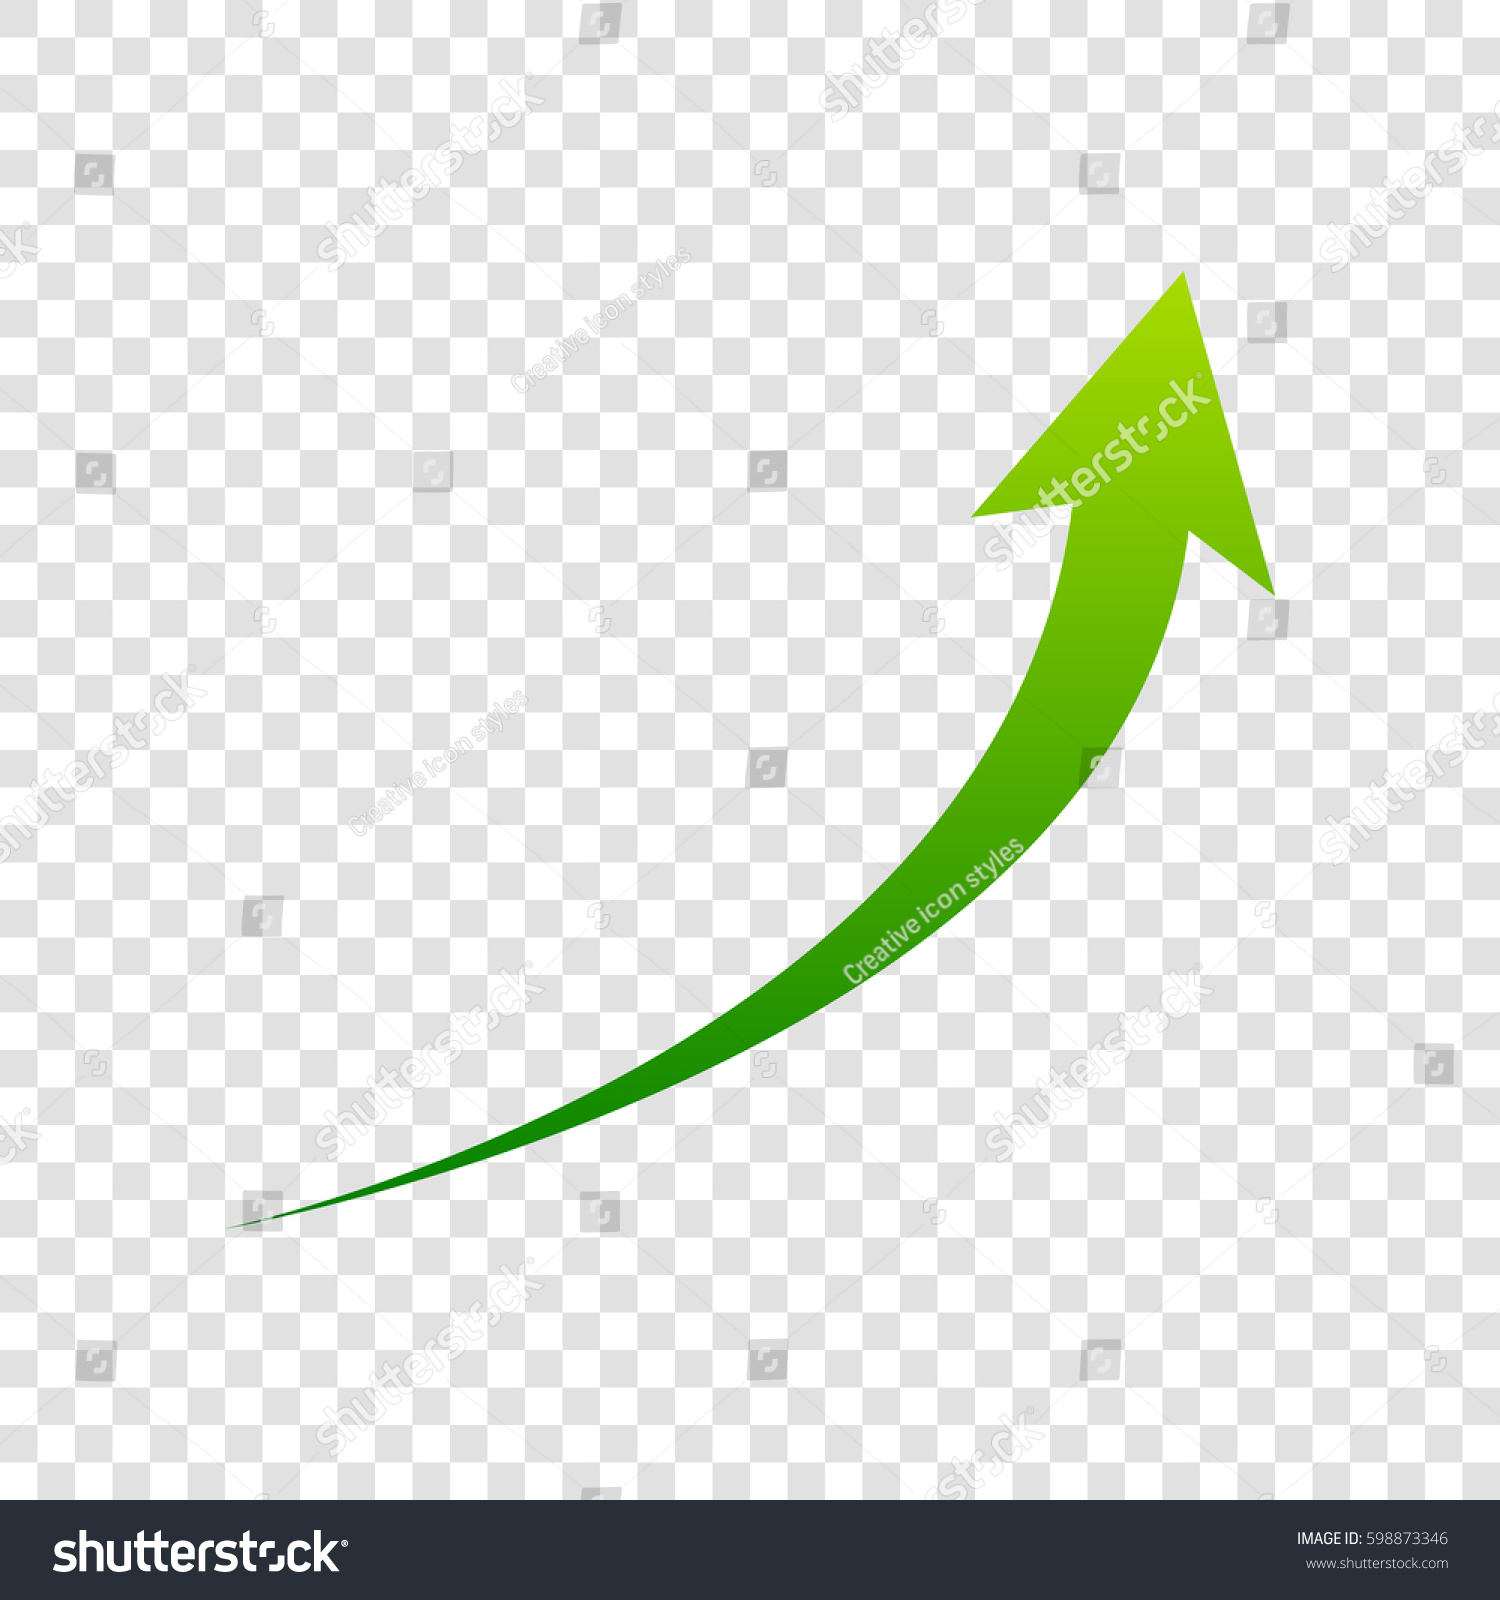 5,429 Green arrow transparent background Stock Vectors, Images & Vector ...